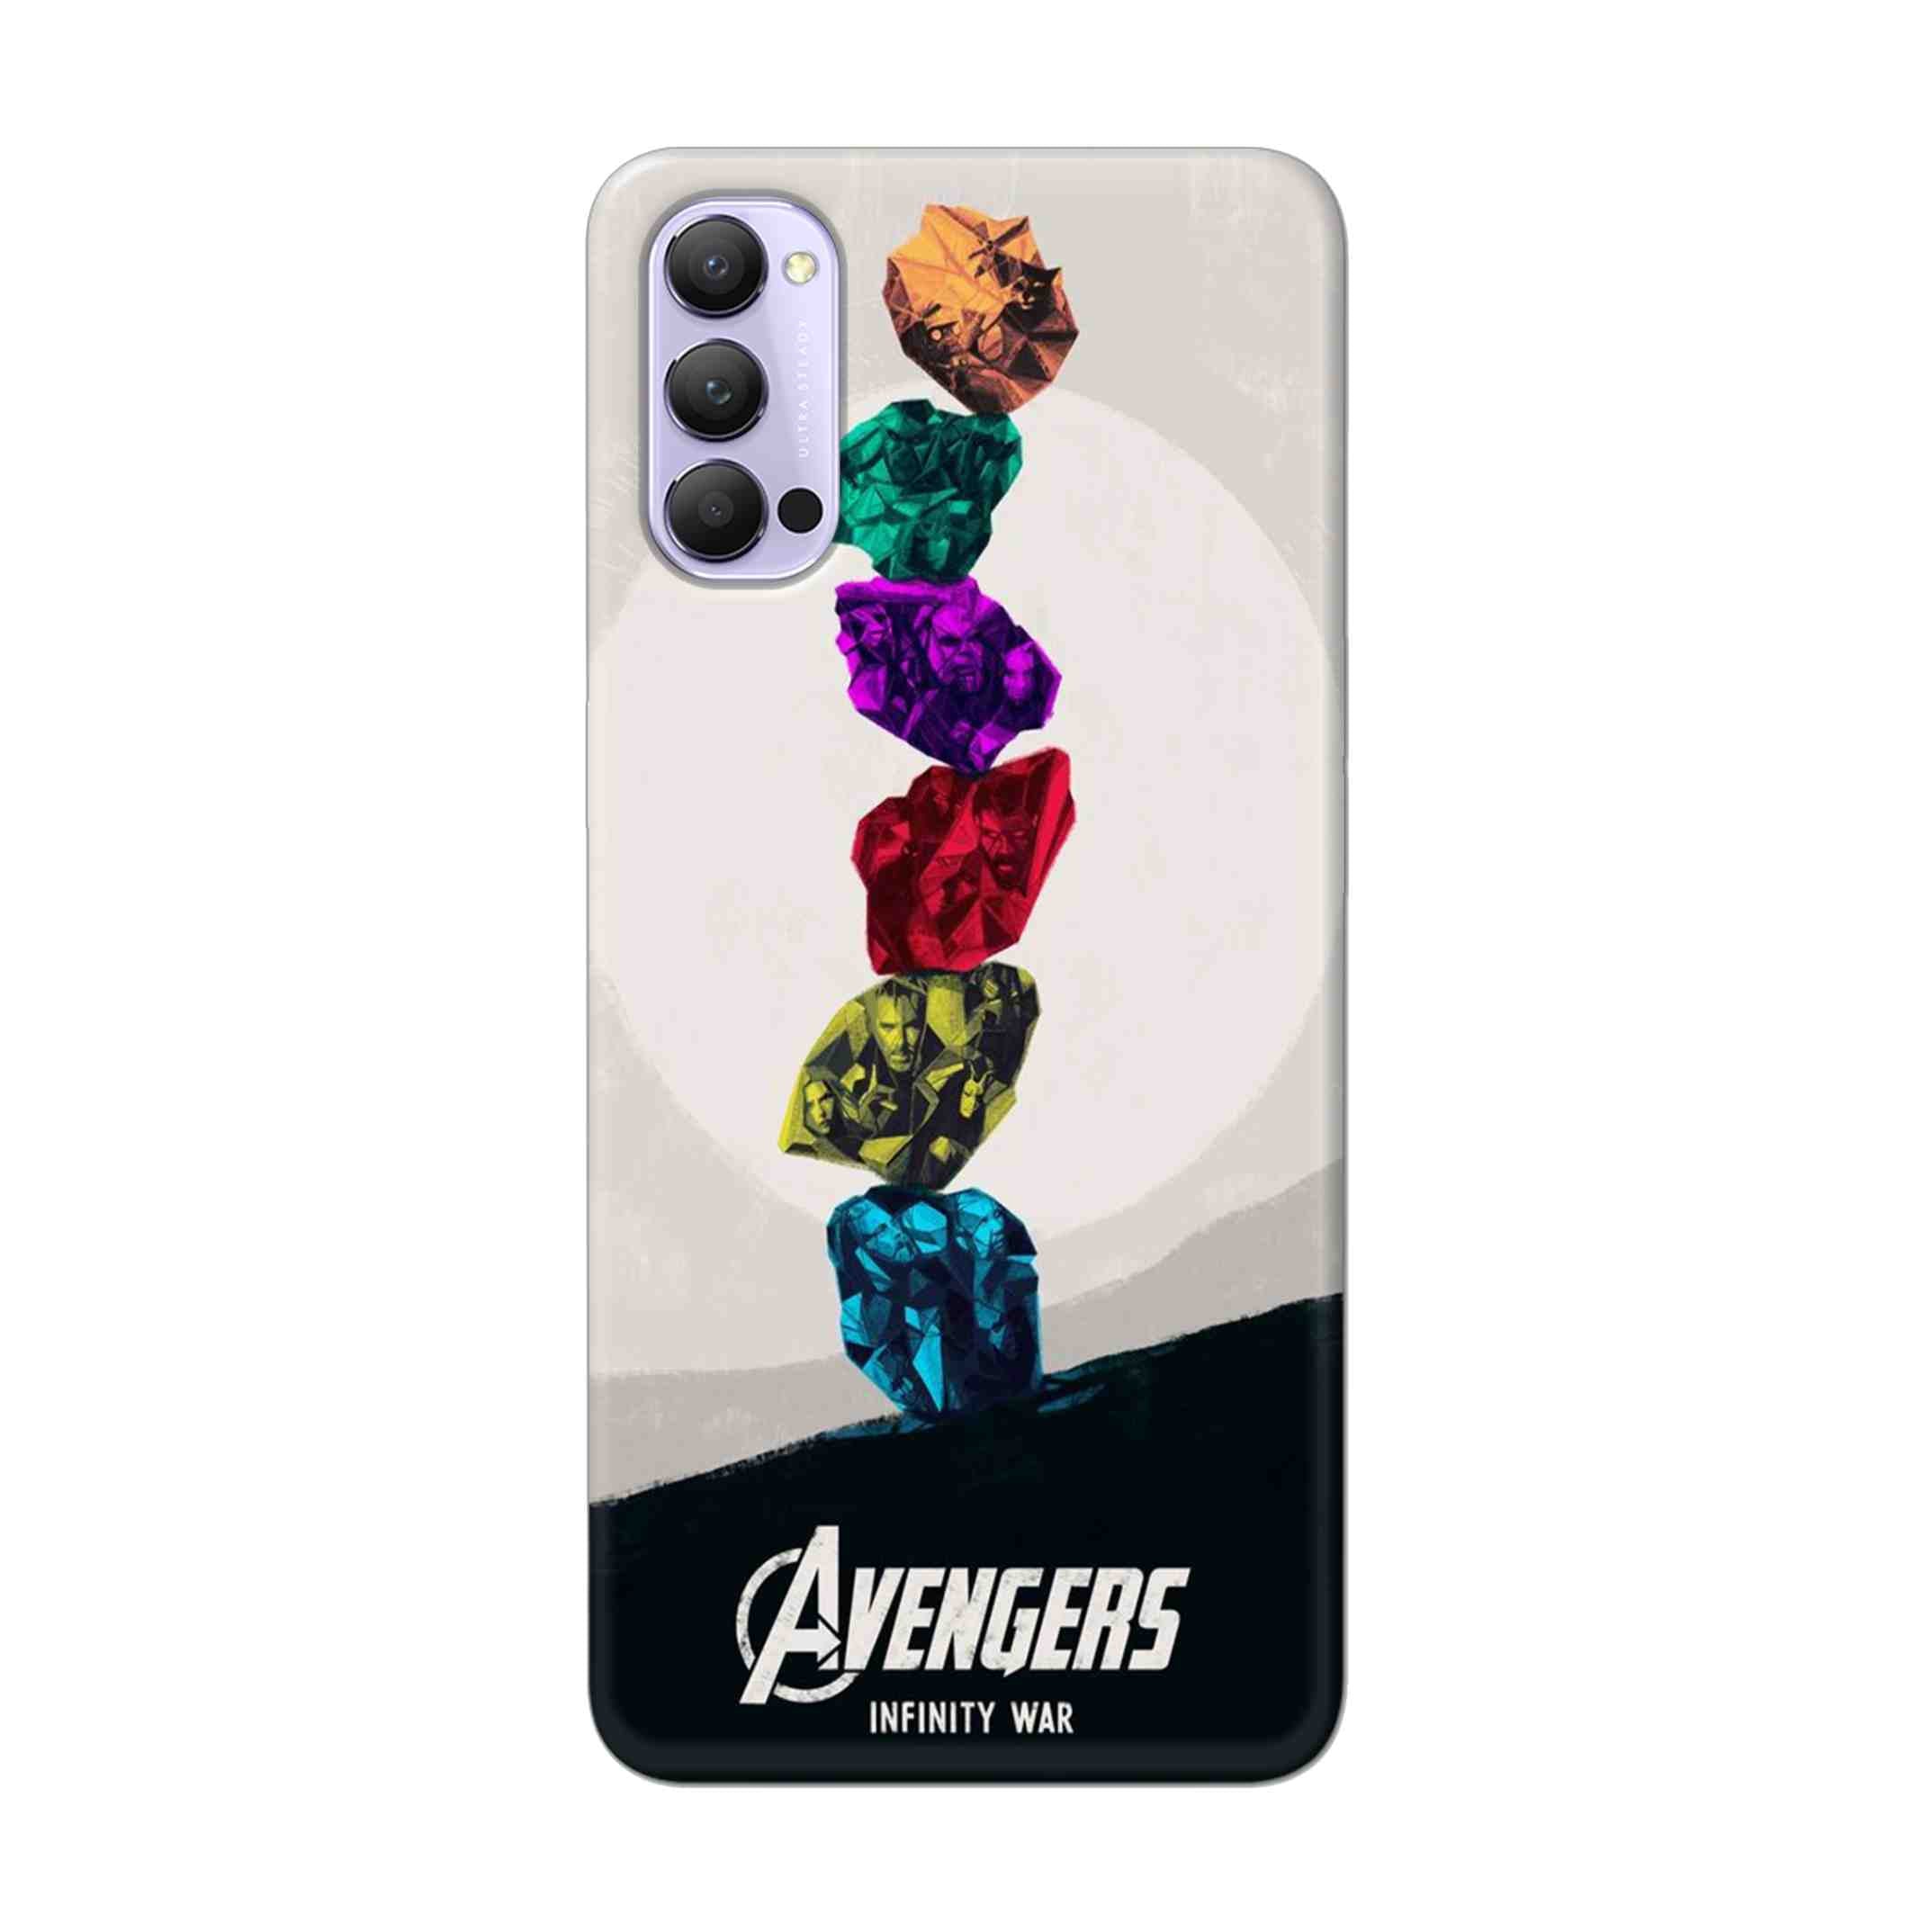 Buy Avengers Stone Hard Back Mobile Phone Case Cover For Oppo Reno 4 Pro Online